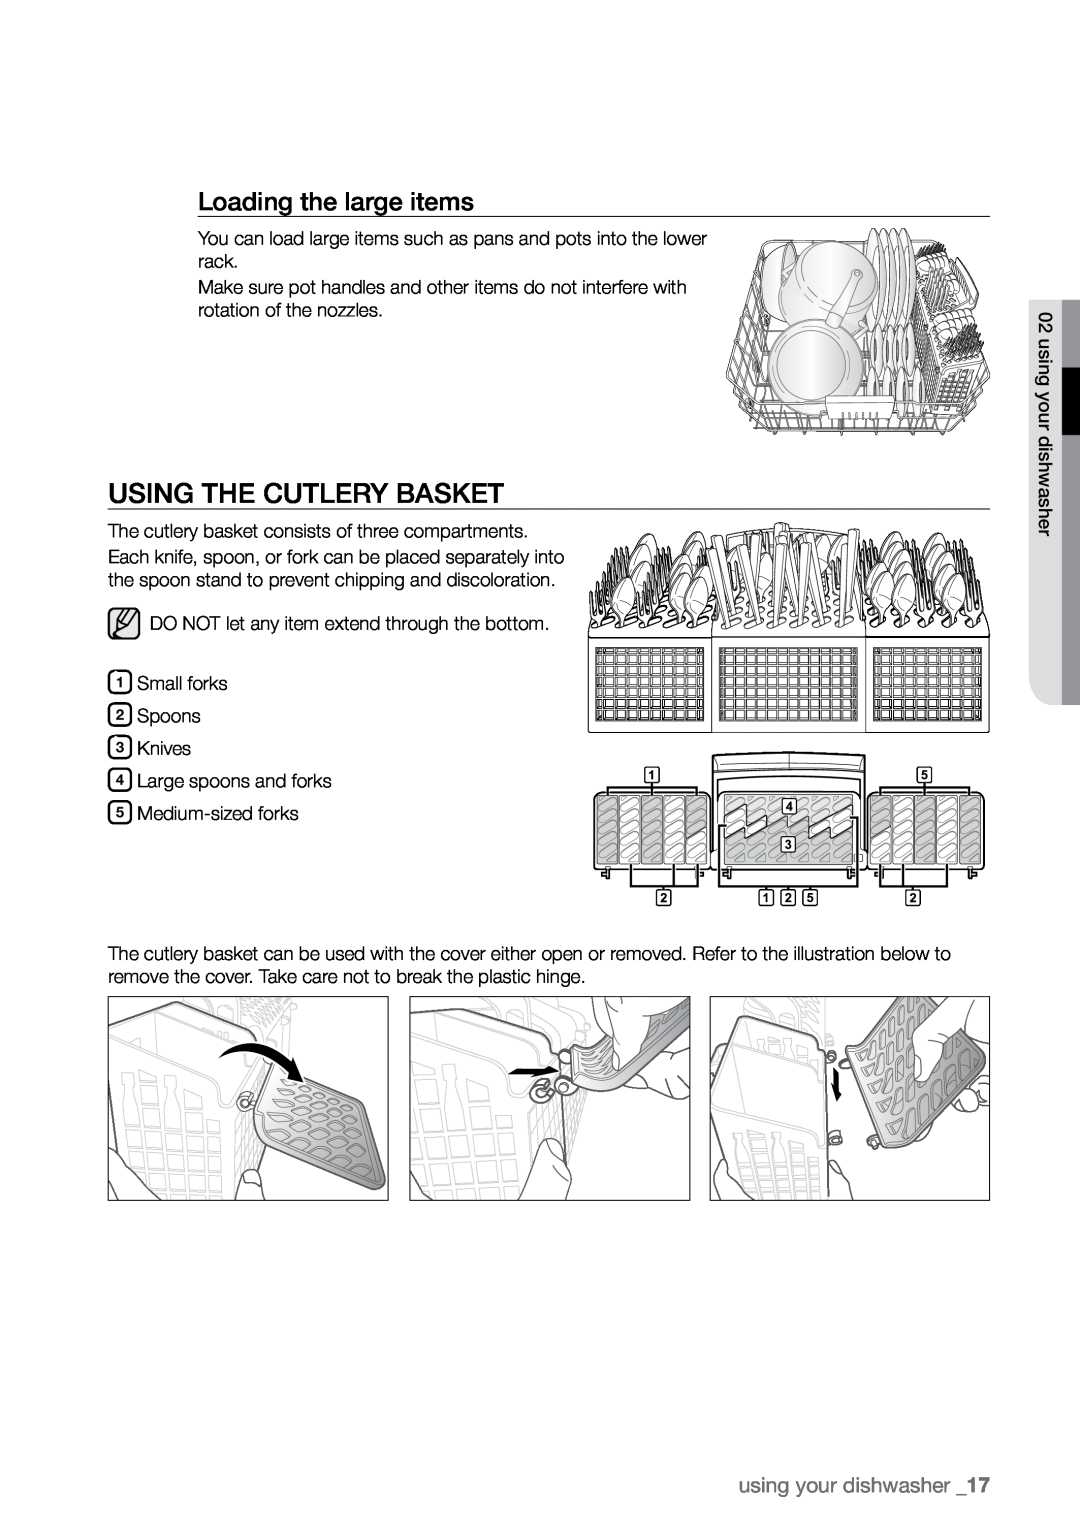 Samsung DMRLHW, DMRLHB, DMRLHS, DMR77LHS user manual Using the cutlery basket, Loading the large items, using your dishwasher 